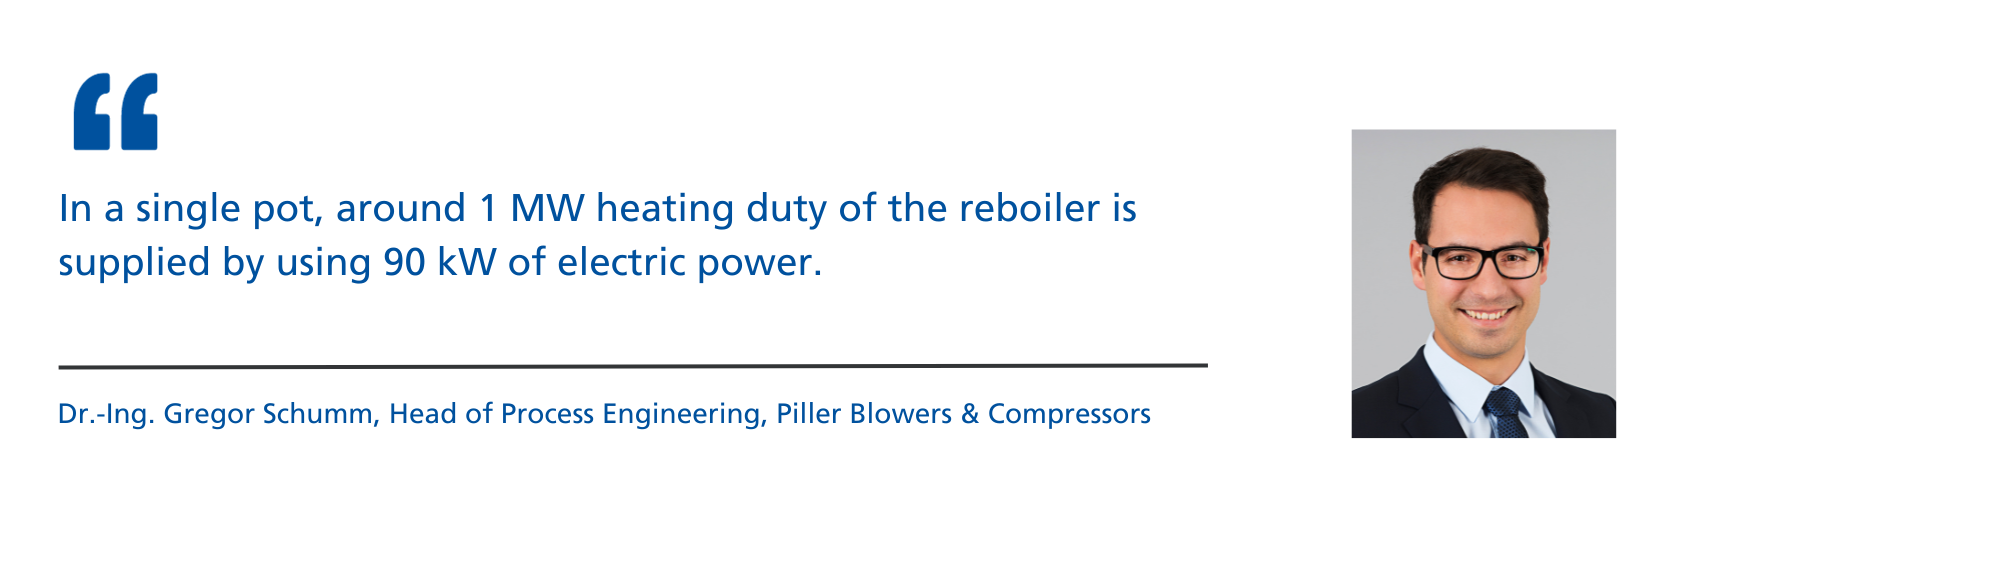 Quote Dr.-Ing. Gregor Schumm, Piller Blowers & Compressors